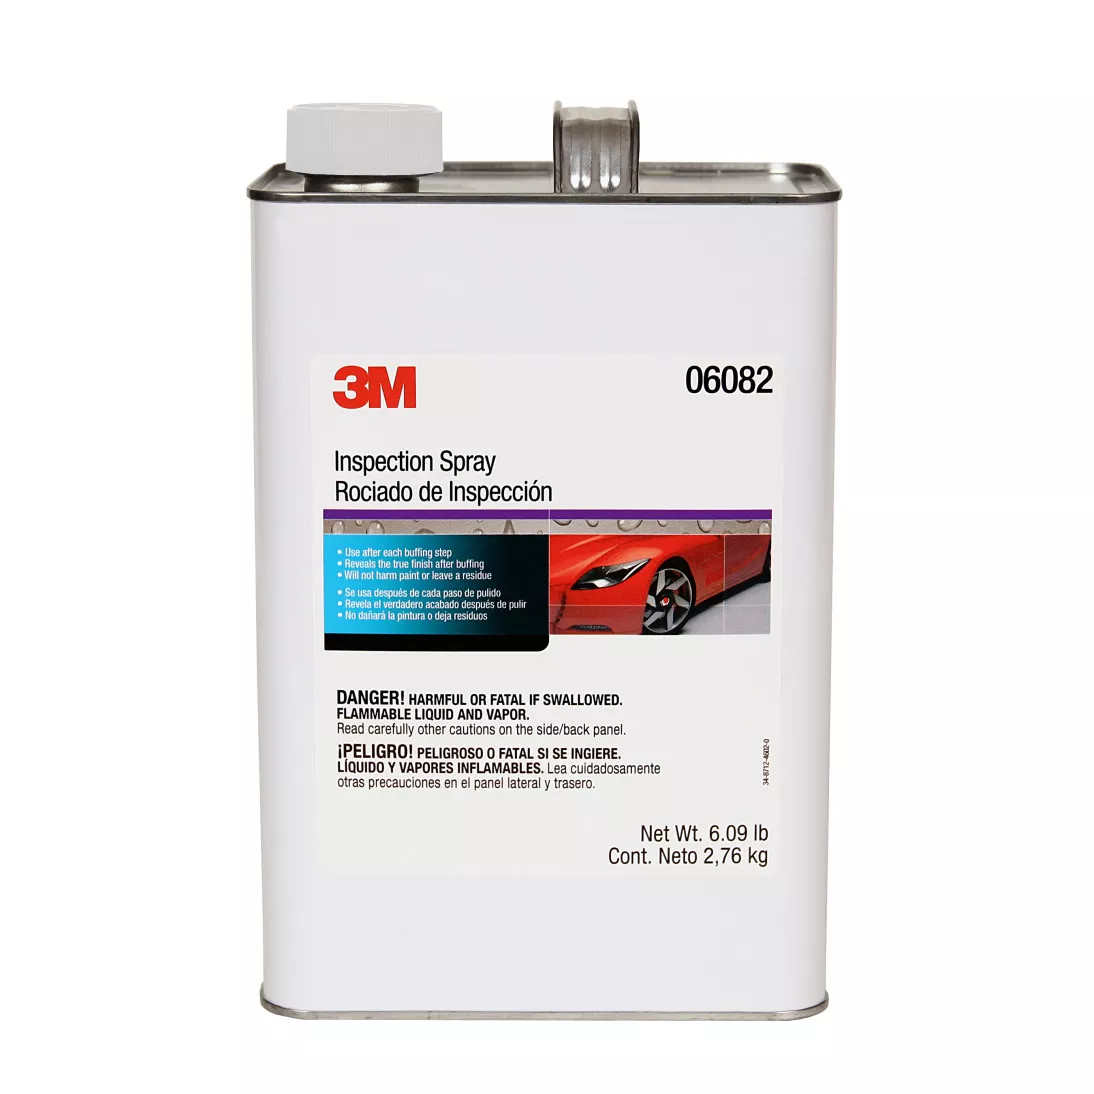 3M™ Inspection Spray, 06082, 1 gal (6.09 lb), 4 per case